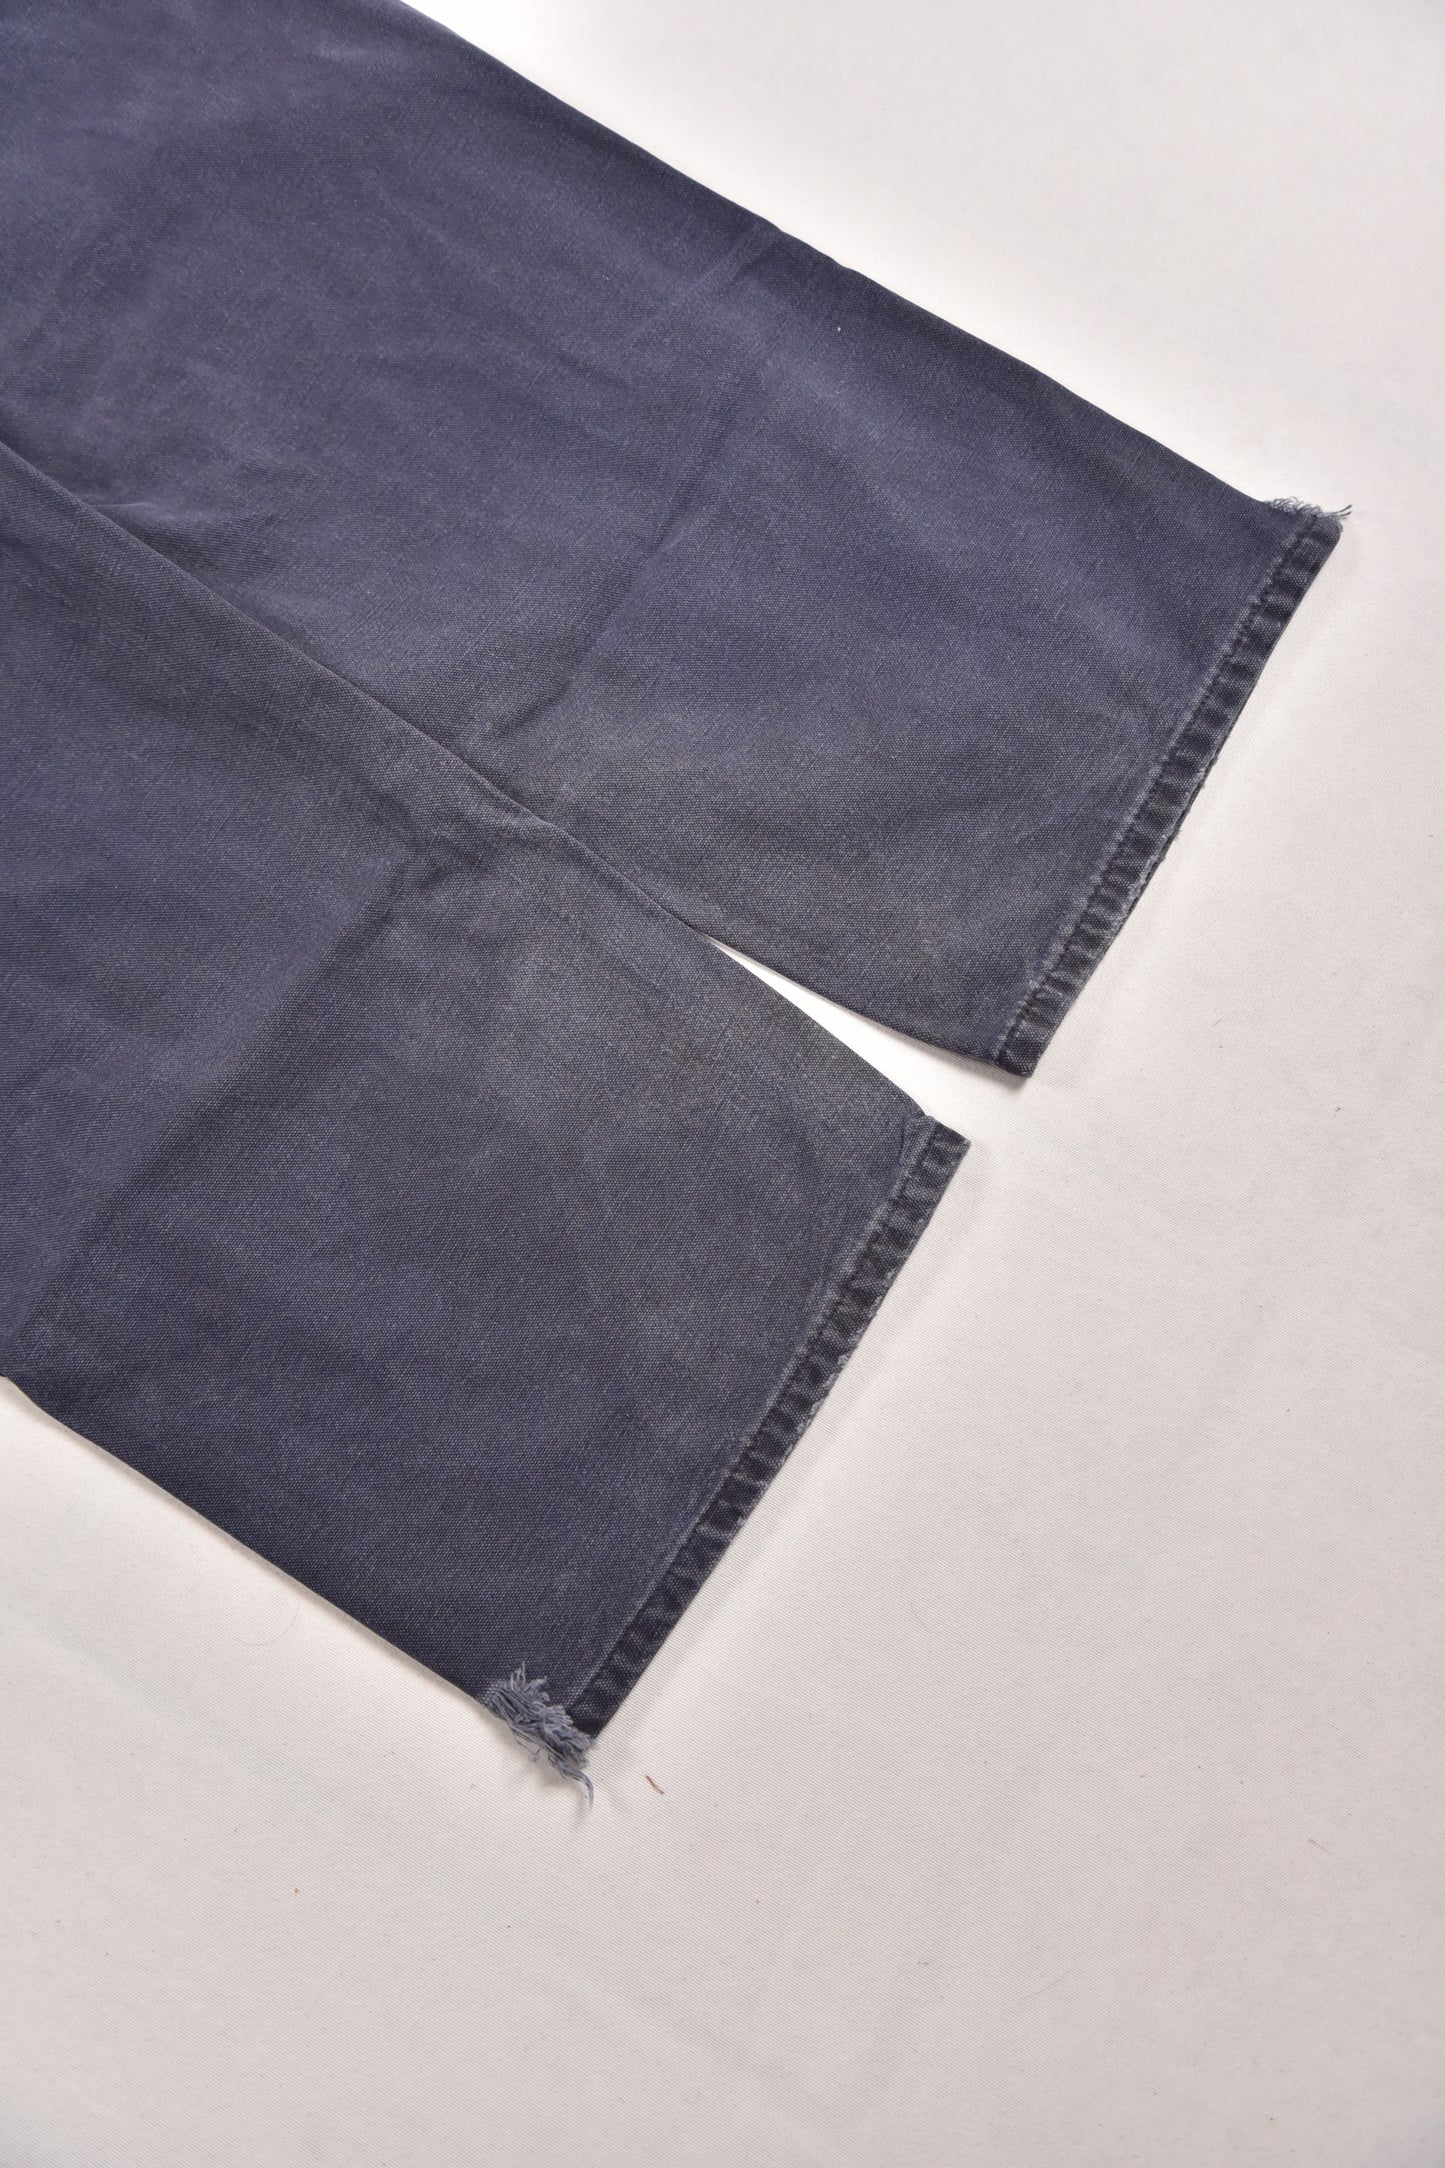 Carhartt Workwear Pants Vintage / 33x30